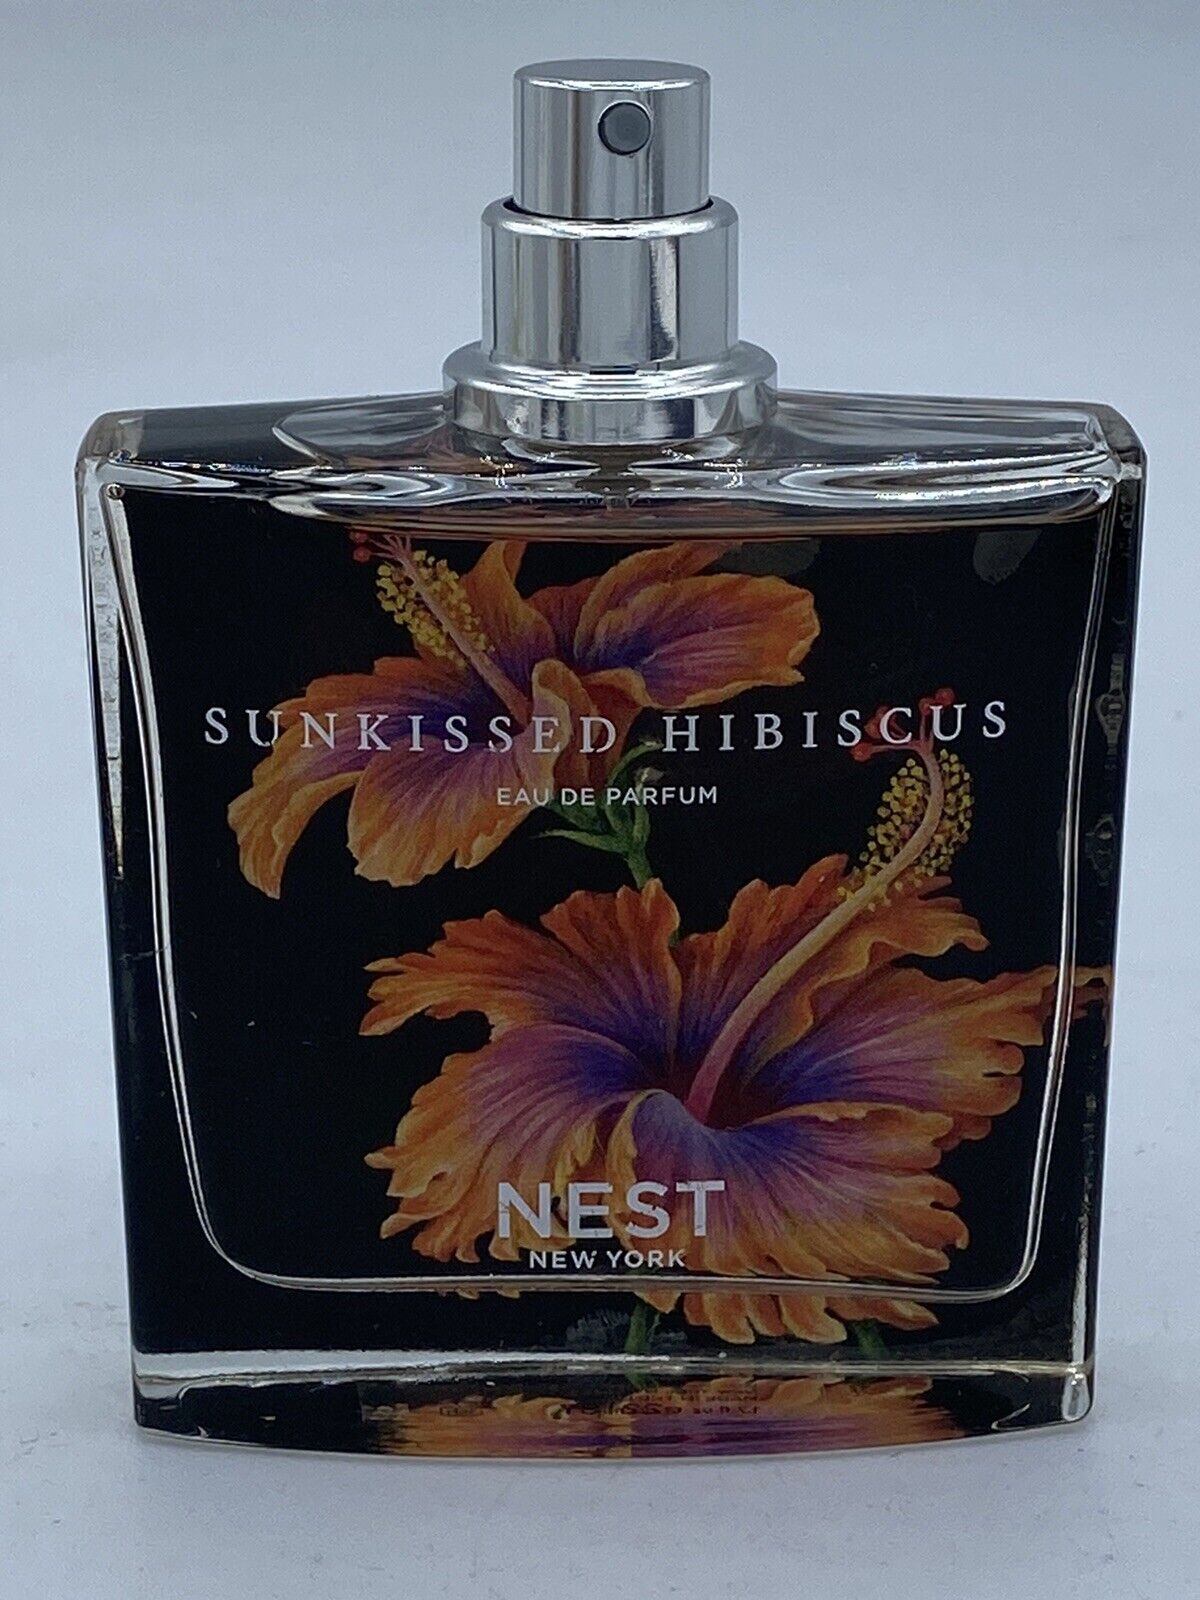 Nest Fragrances New York Sunkissed Hibiscus EDP 1.7 Fl oz About 95% Full Bottle.